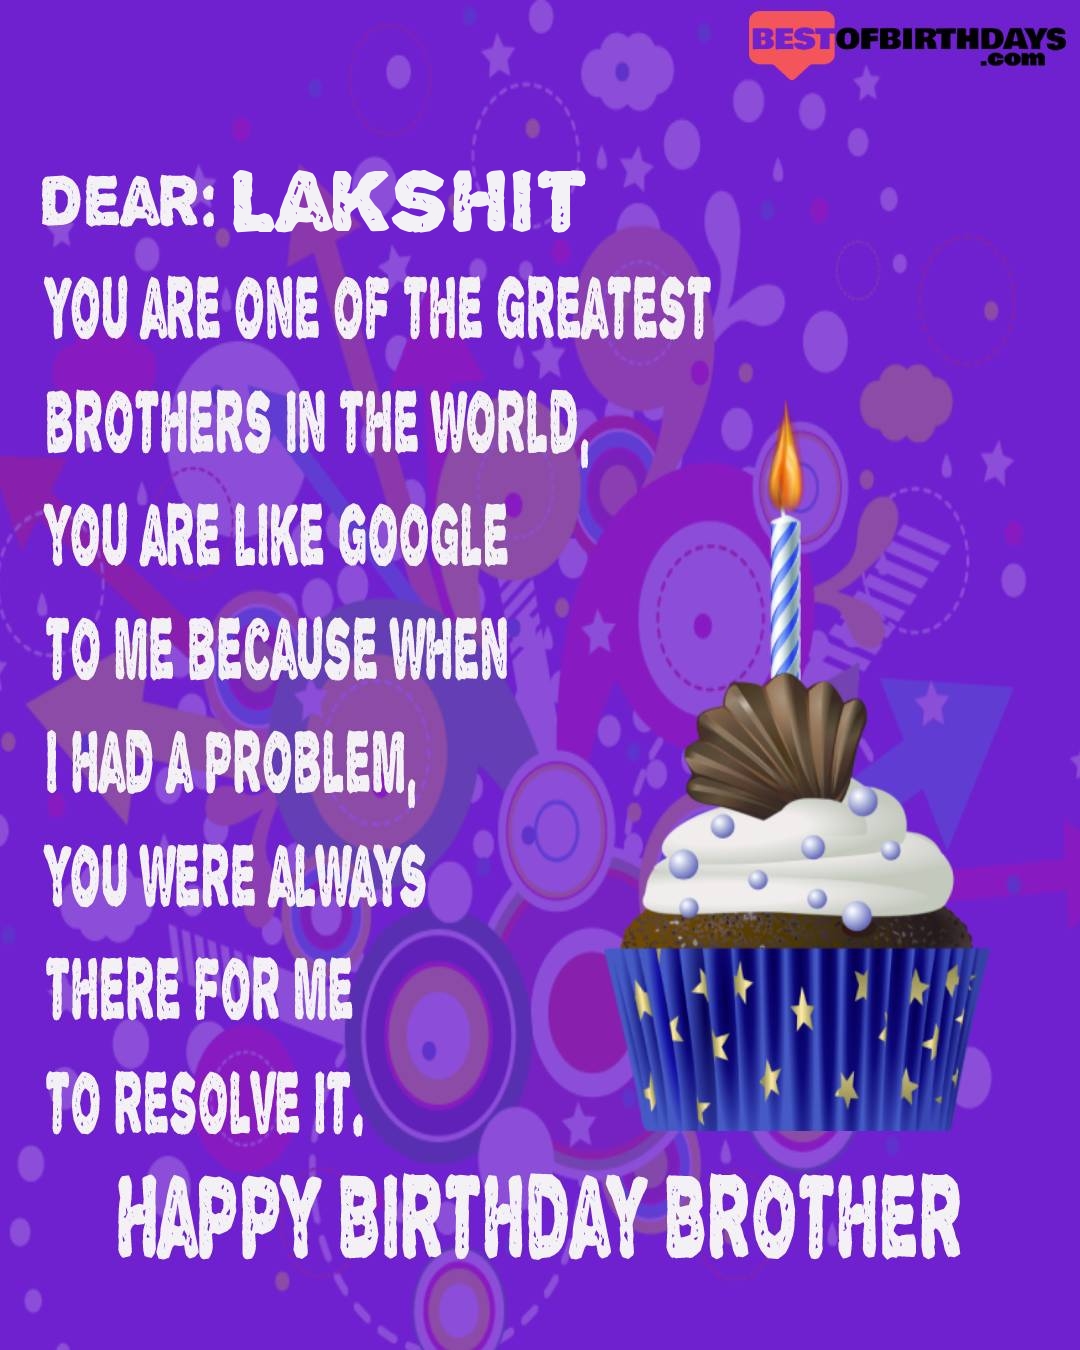 Happy birthday lakshit bhai brother bro